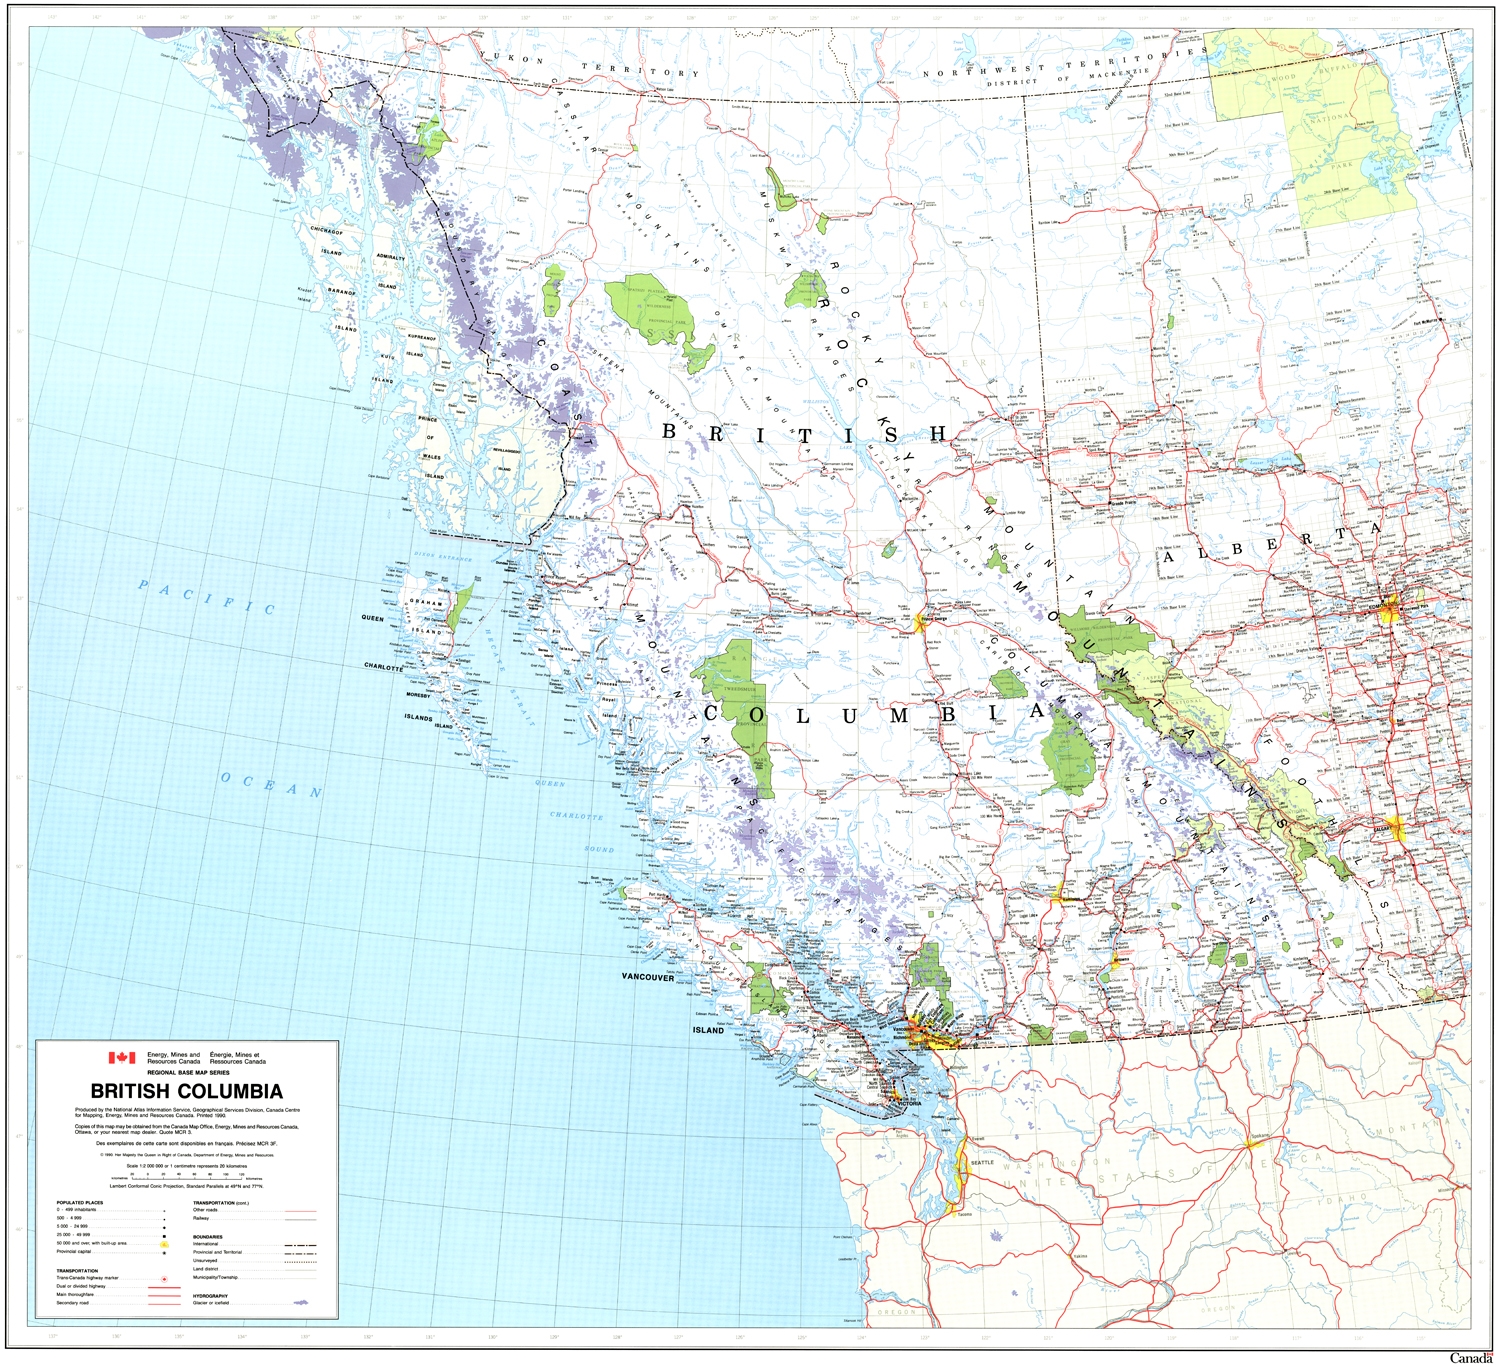 British Columbia Provincial Base Map 1:2,000,000